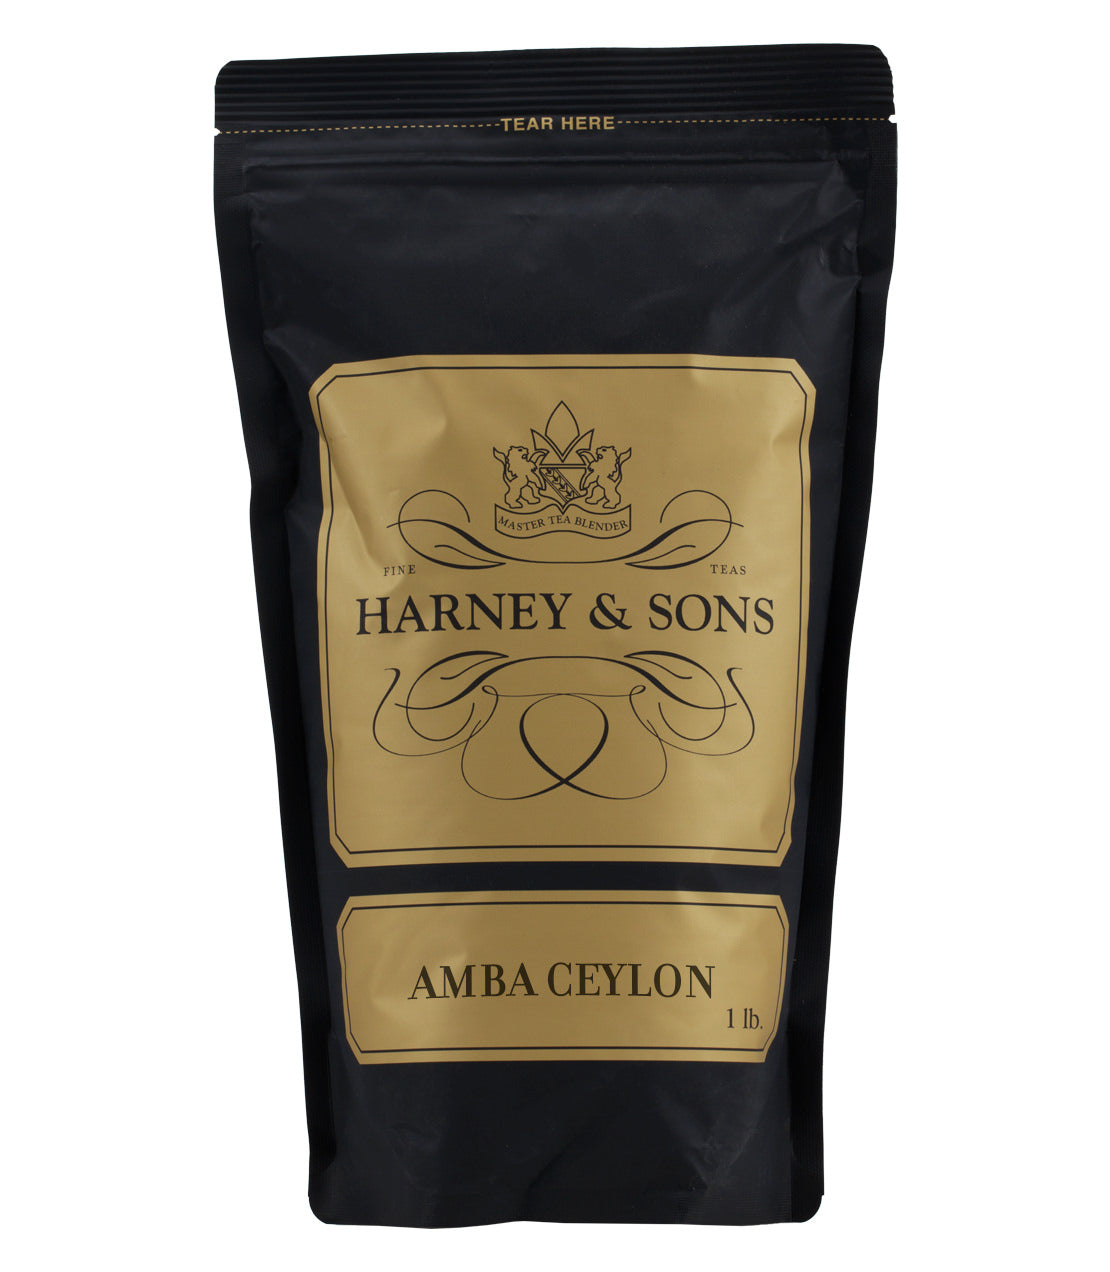 Amba Ceylon - Loose 1 lb. Bag - Harney & Sons Fine Teas